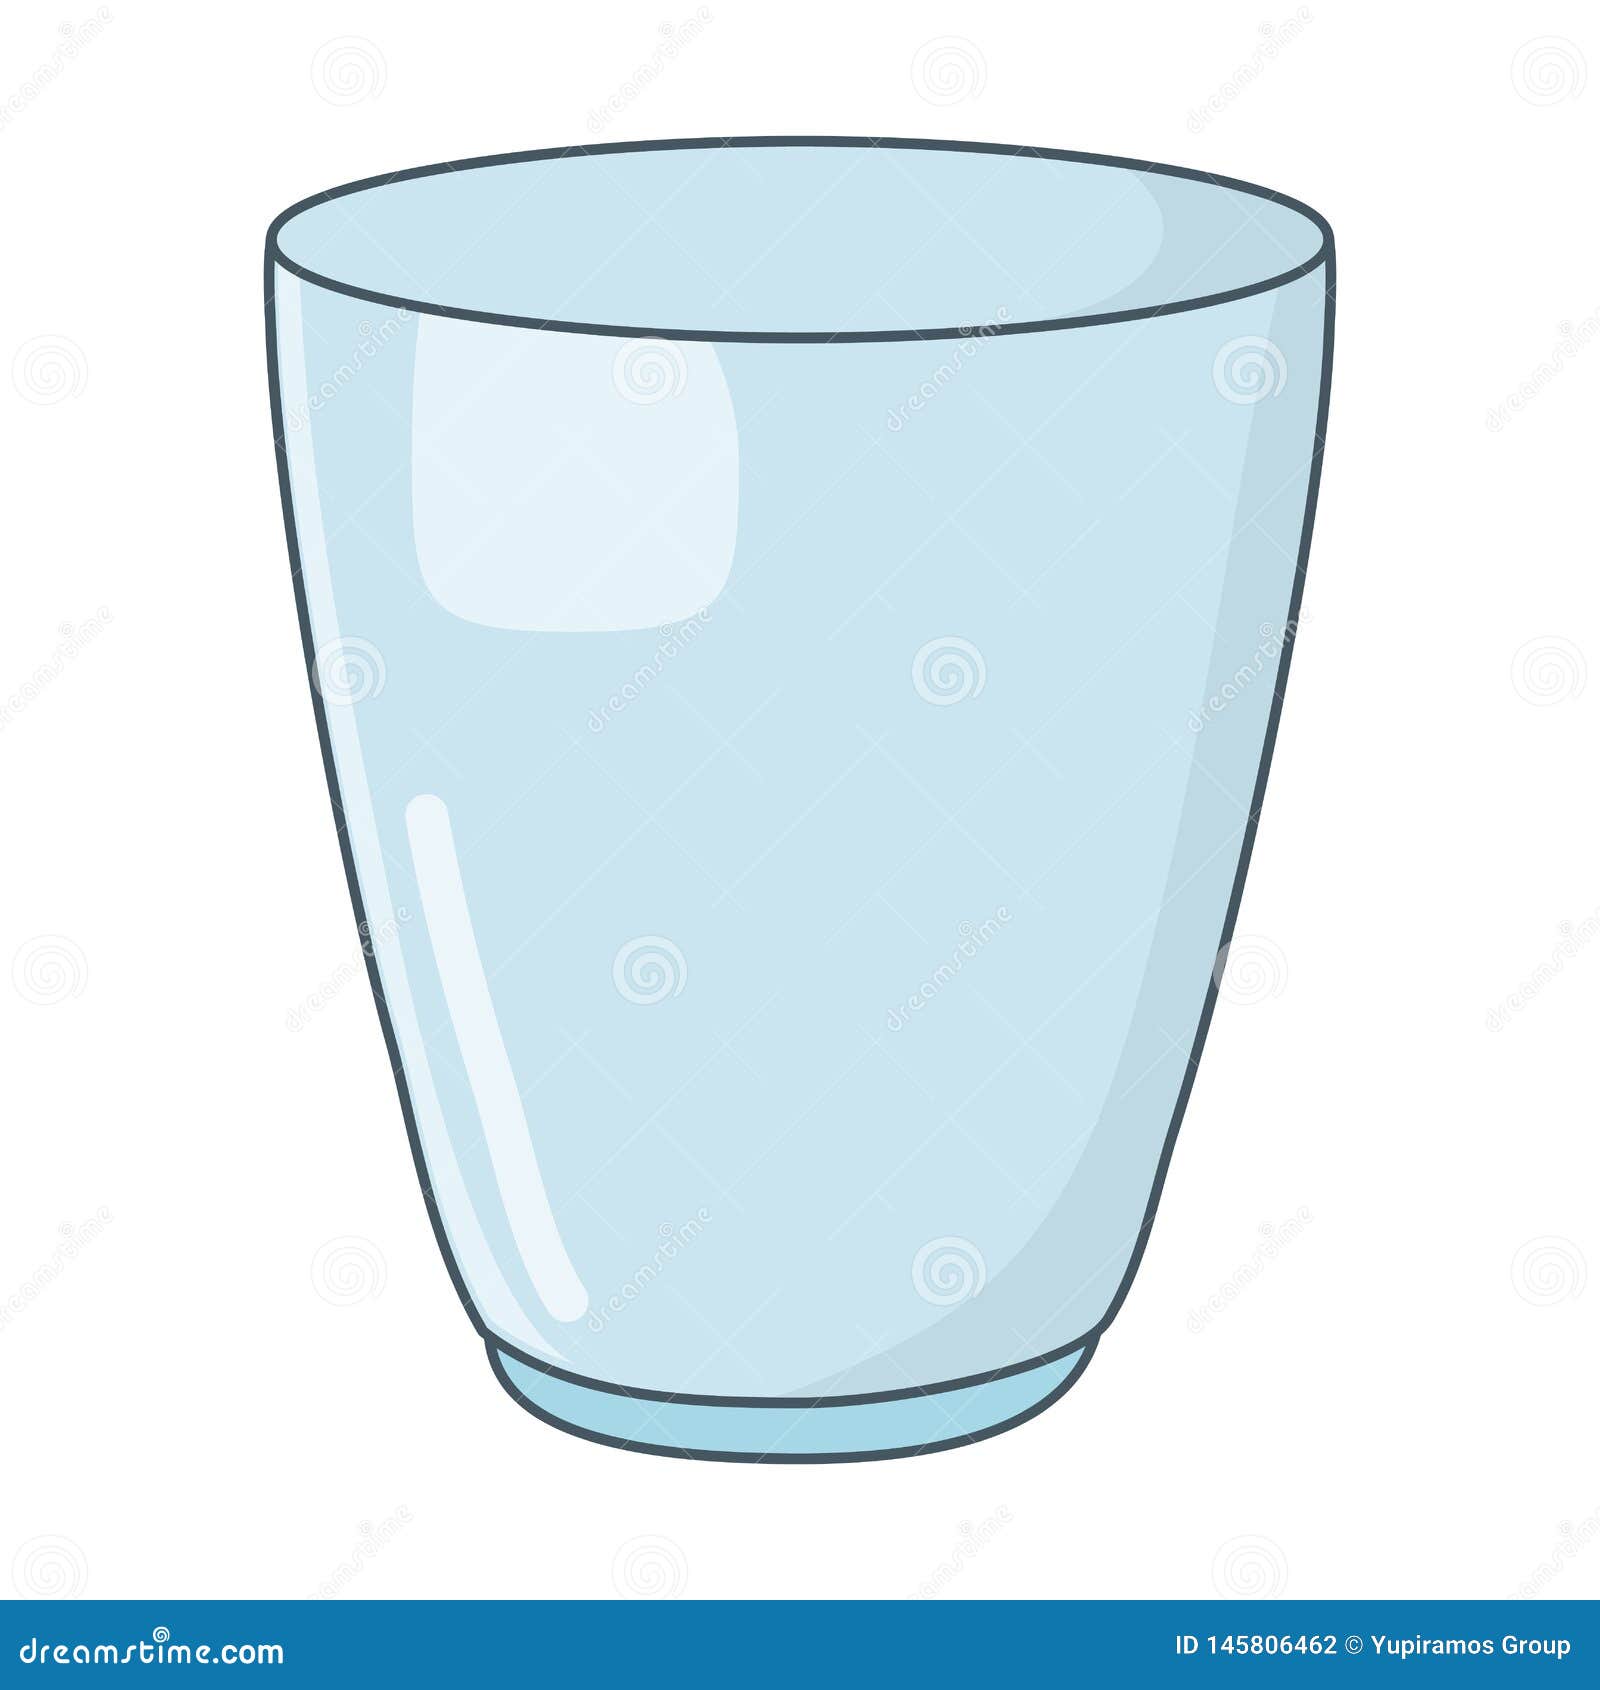 https://thumbs.dreamstime.com/z/glass-cup-cartoon-vector-illustration-graphic-design-glass-cup-cartoon-145806462.jpg